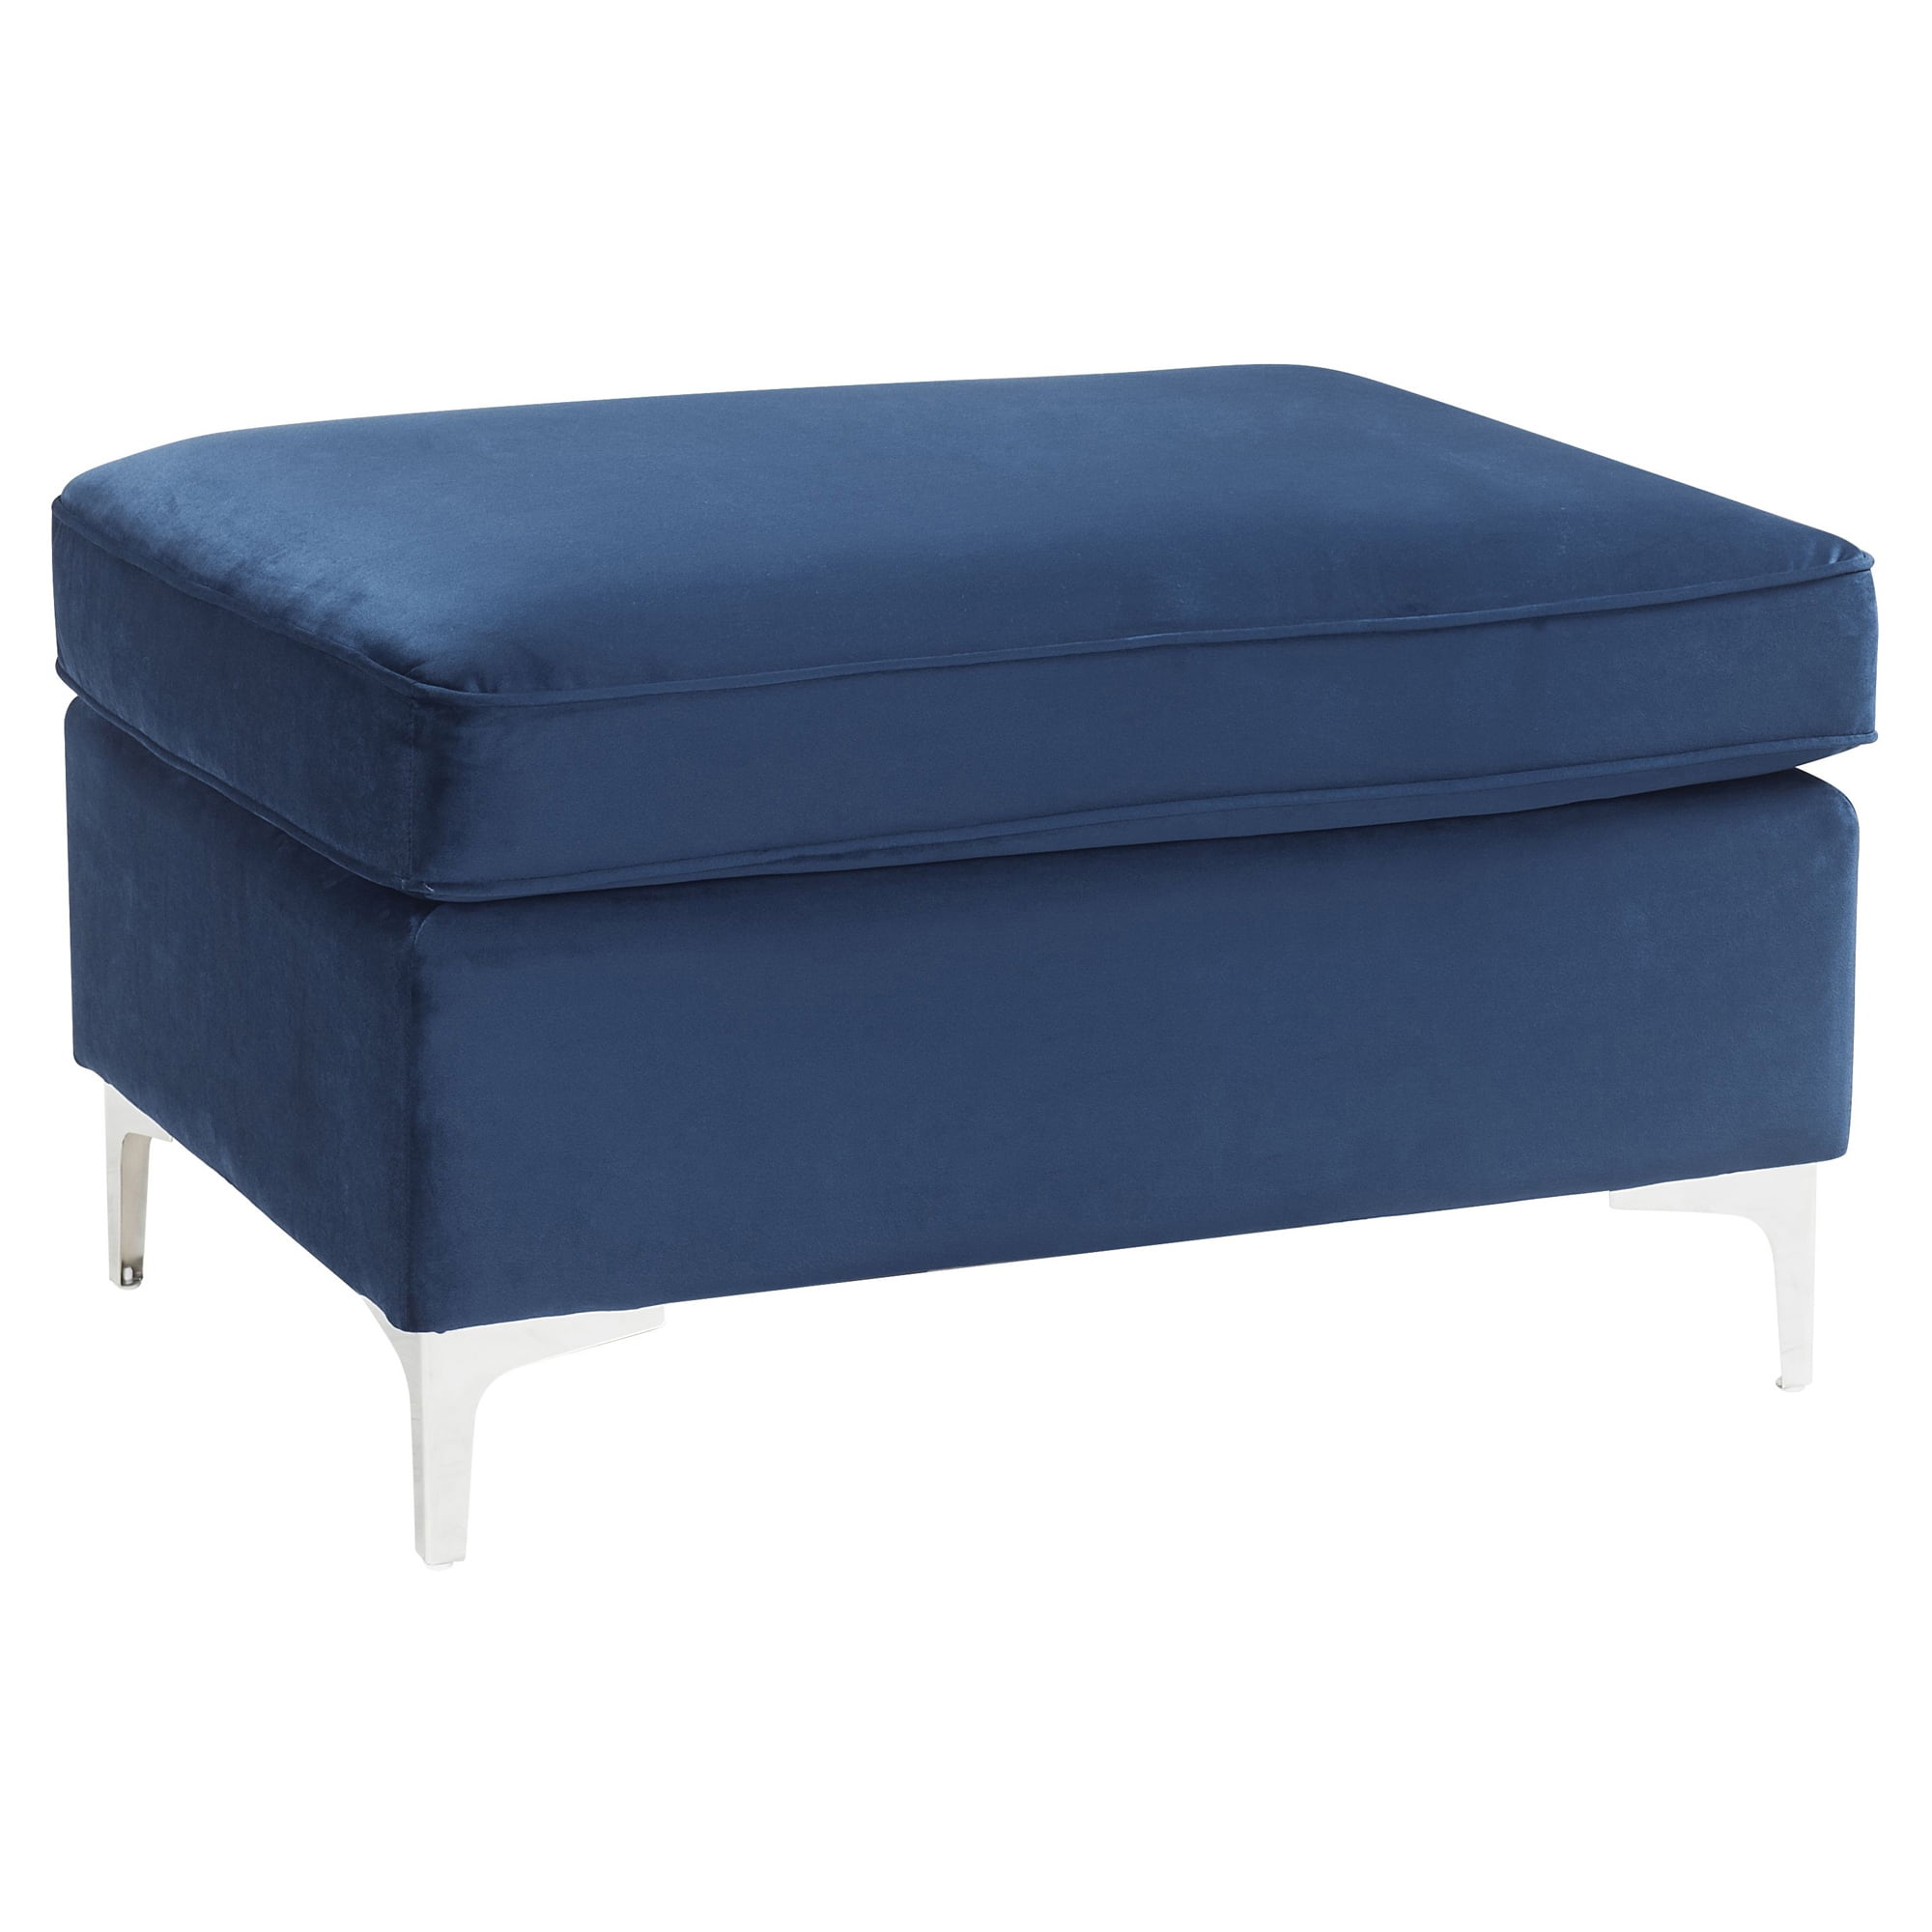 Picture of Acme Furniture 57345 36 x 27 x 20 in. Jaszira Ottoman, Blue Velvet